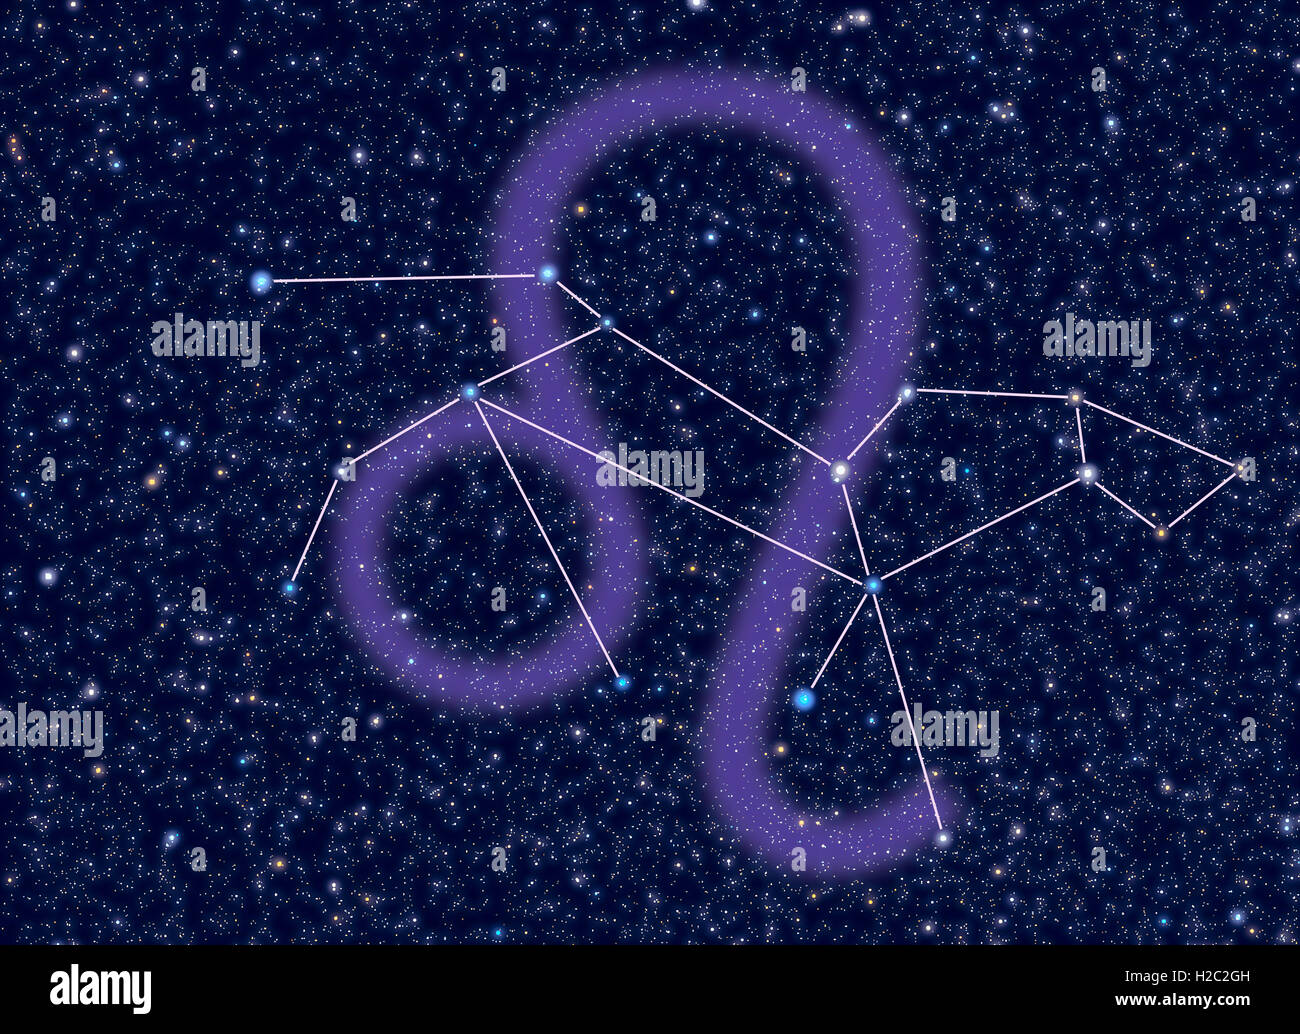 Leo (The Lion) Zodiac constellation. Leo sign corresponds to period